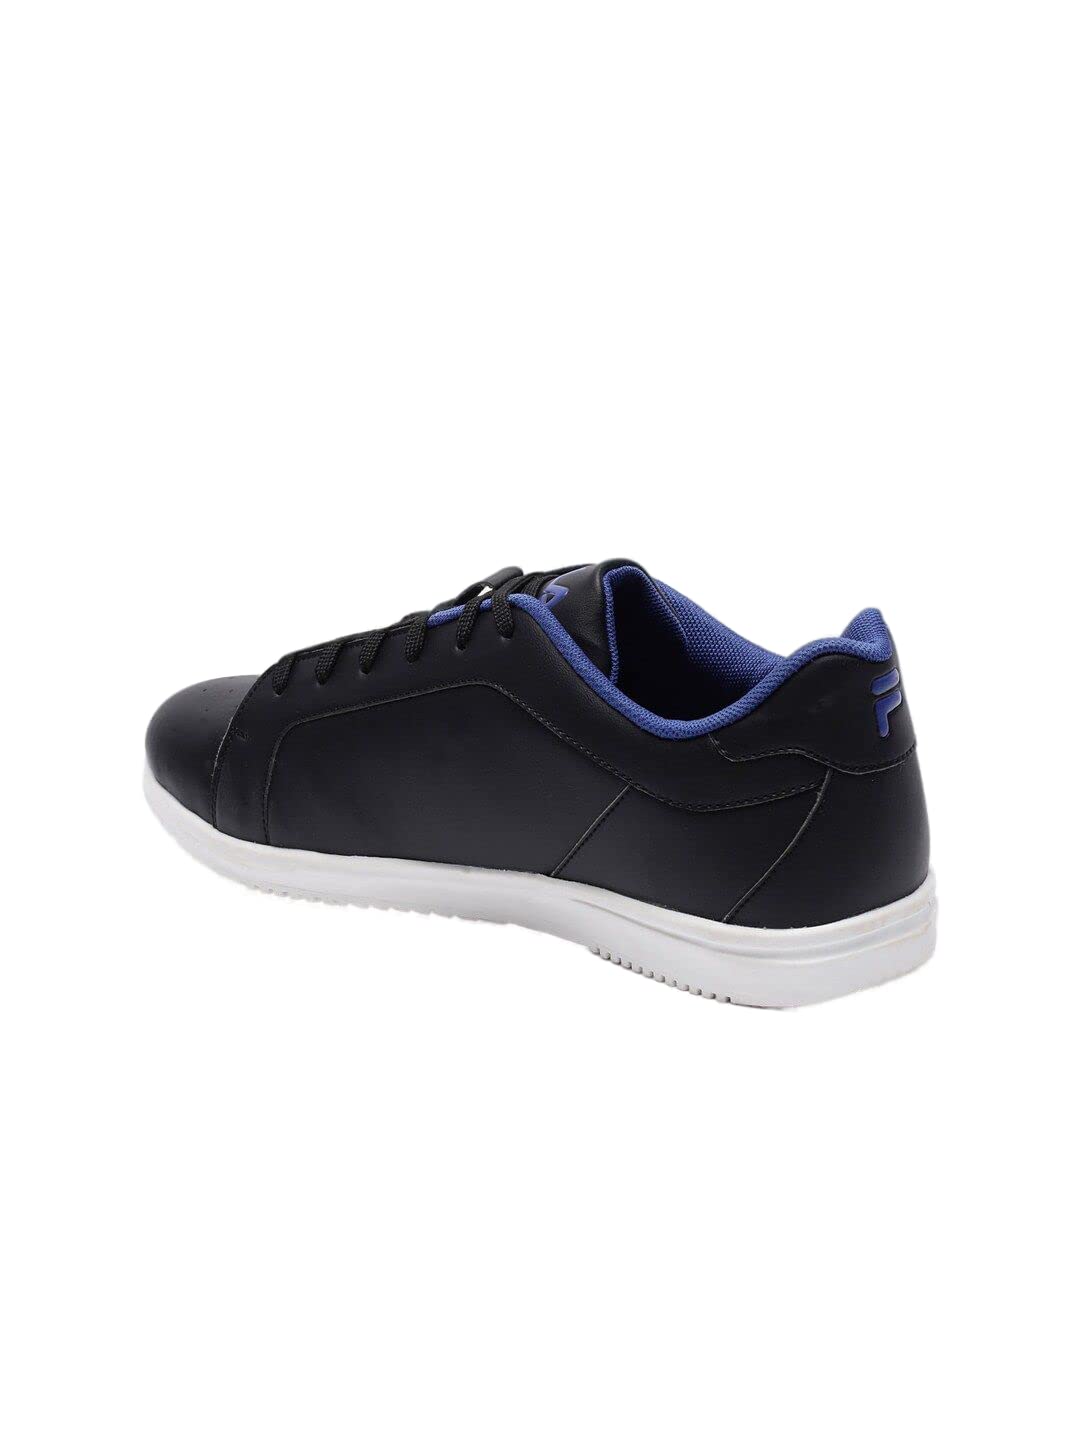 Fila Men's Koroch BLK/DTR BLU Casual Shoes- Black 